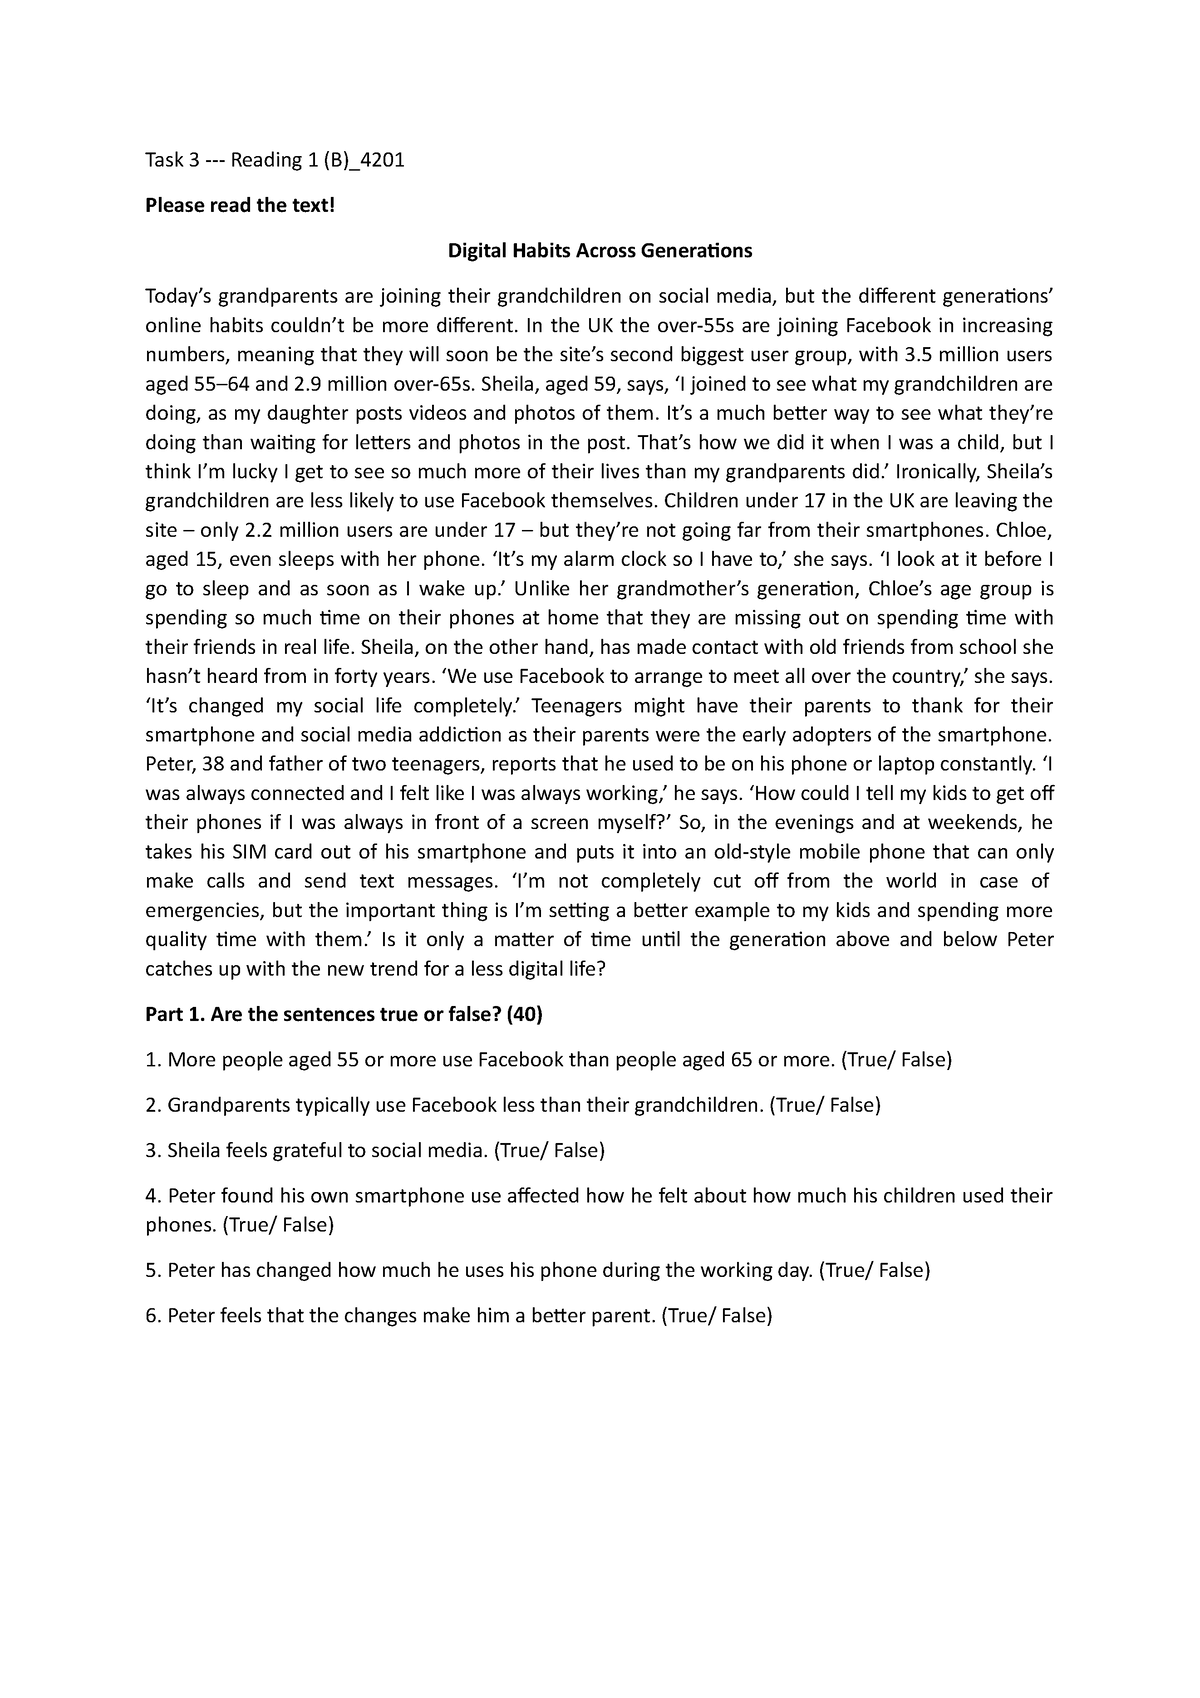 Naskah BING4102 Tugas 3 Reading 1 - Task 3 - Reading 1 (B)_ Please read ...